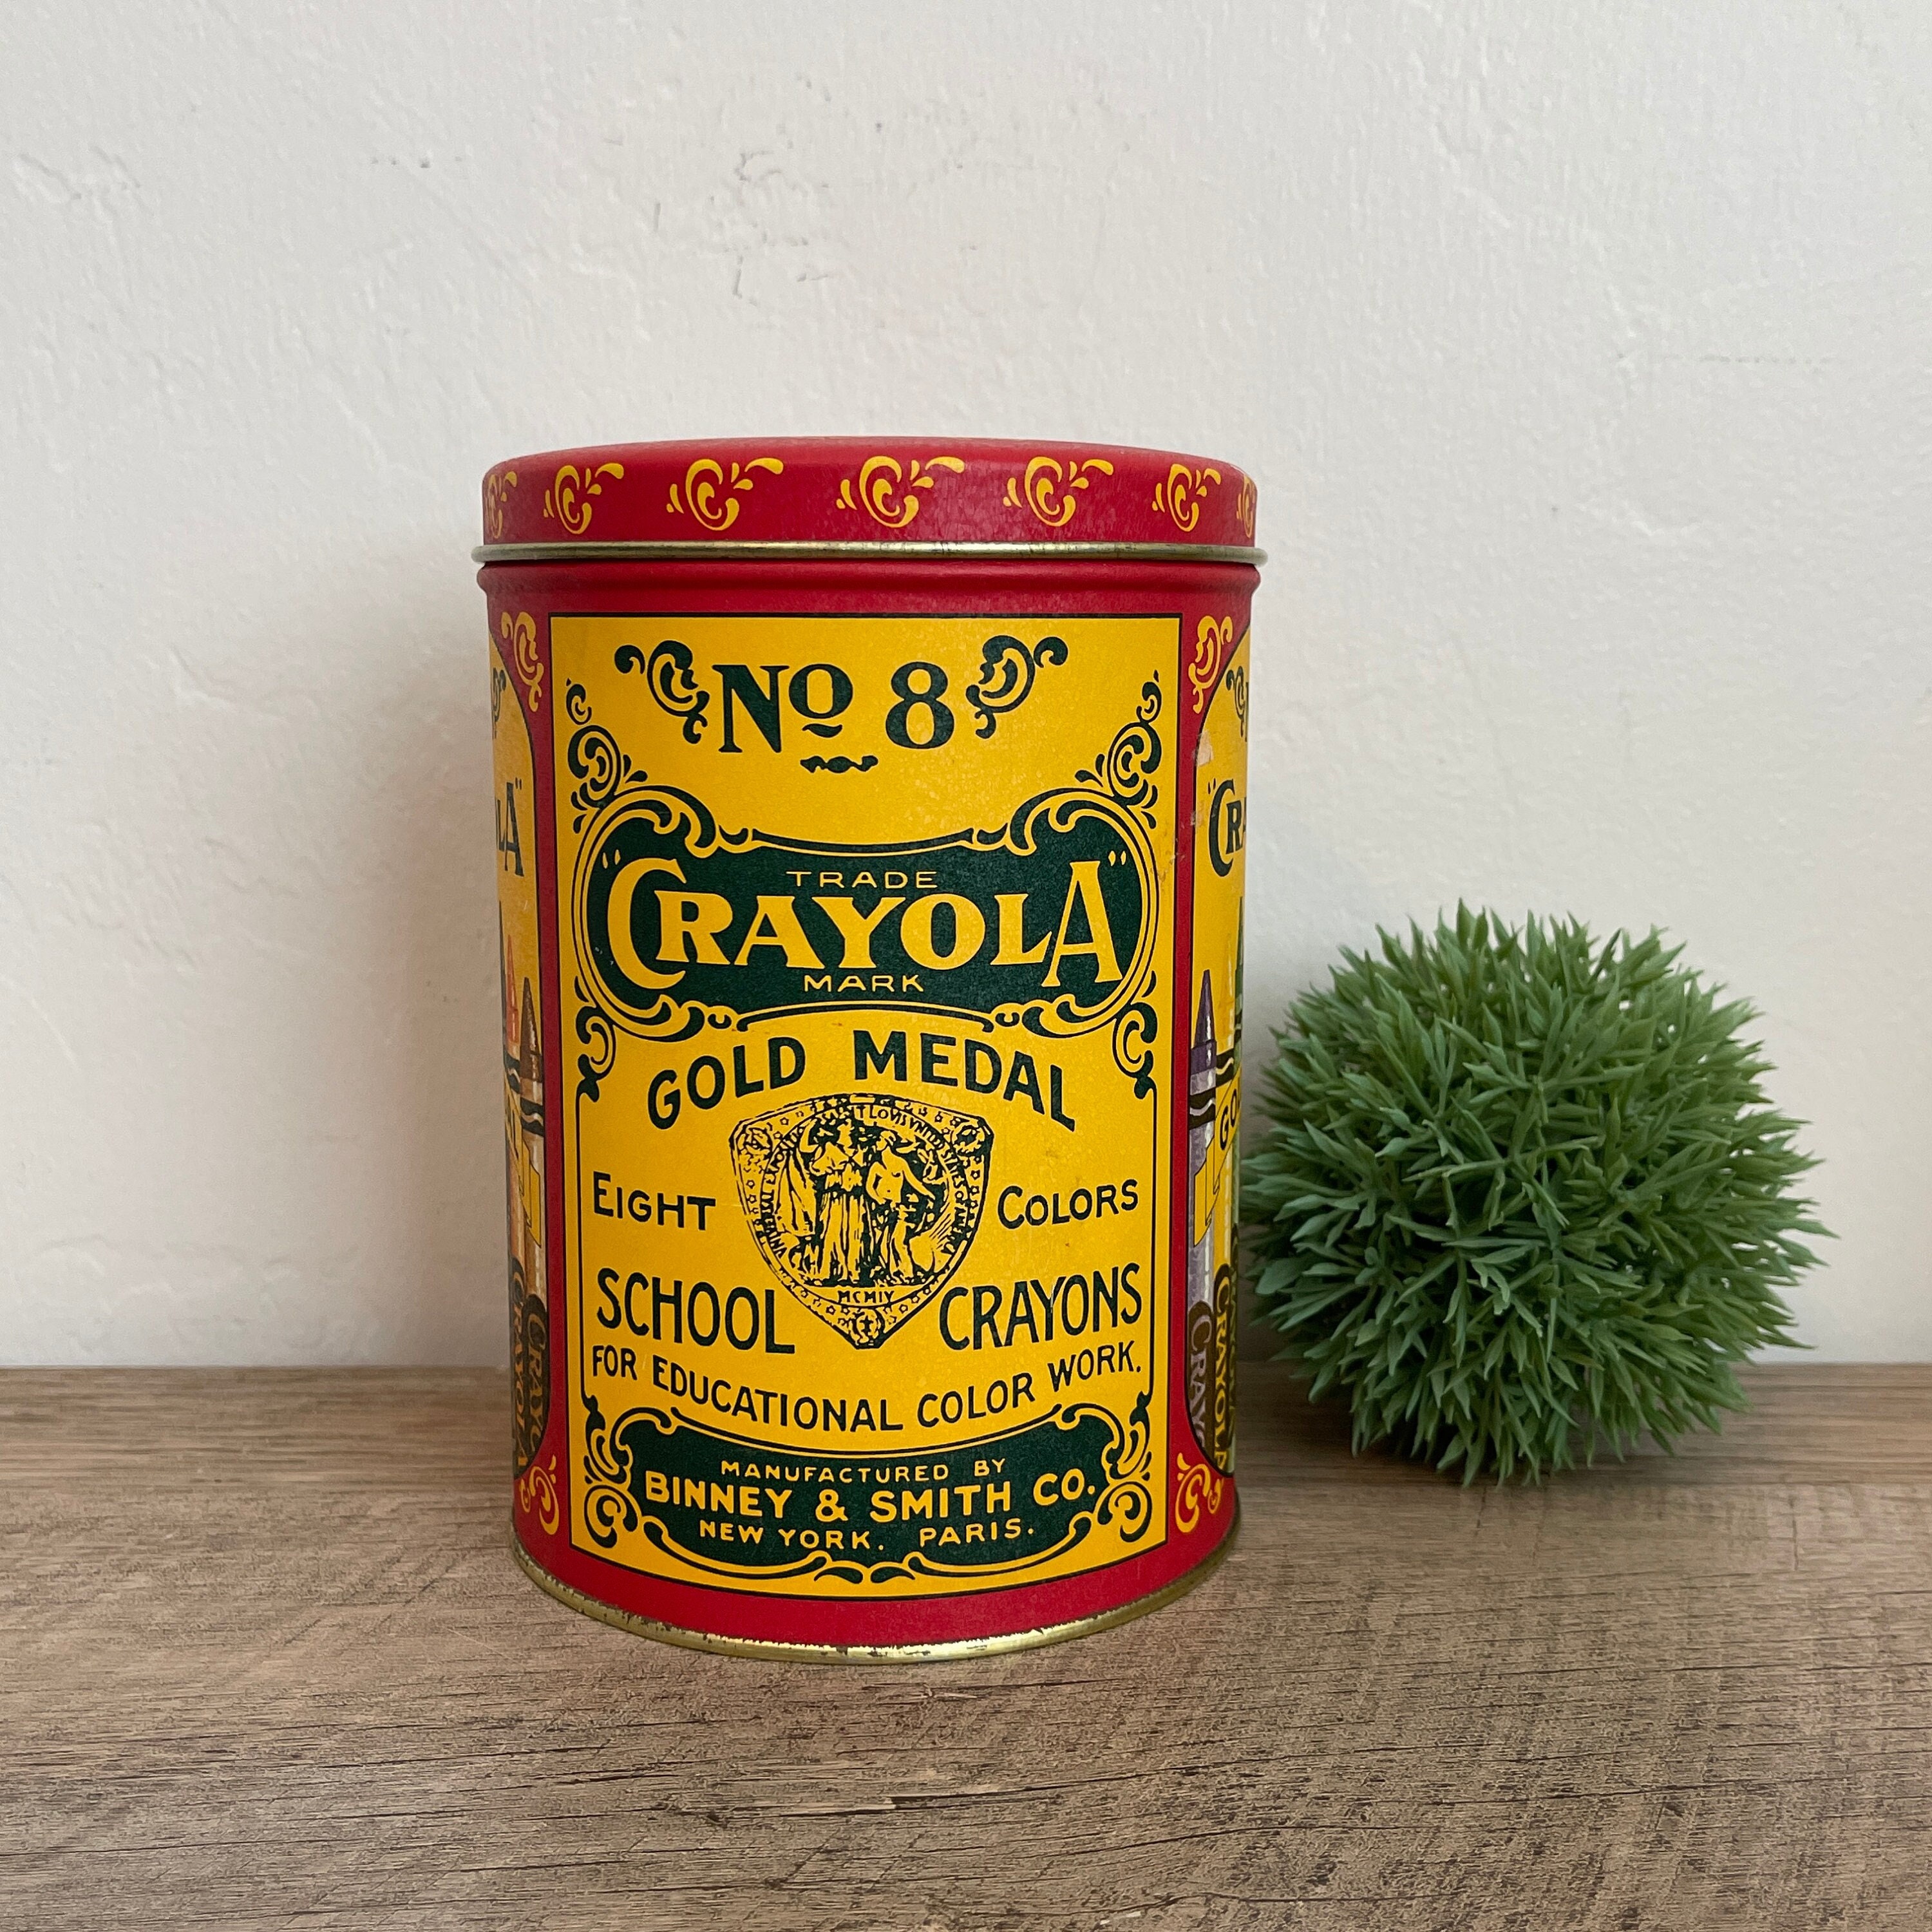 Crayola crayons 90th anniversary vintage tin metal storage